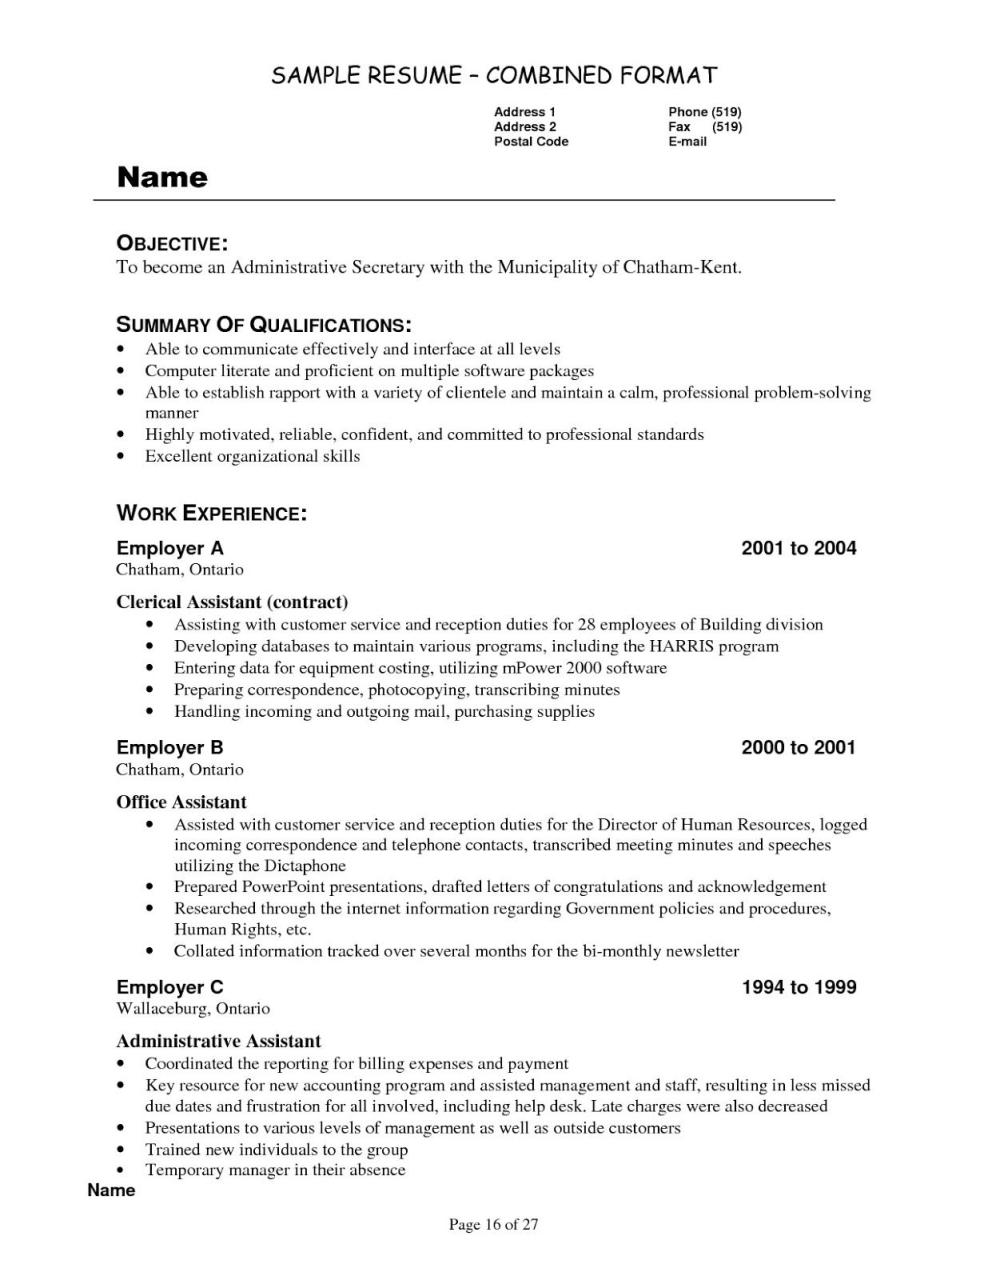 Job Resume Examples 2020